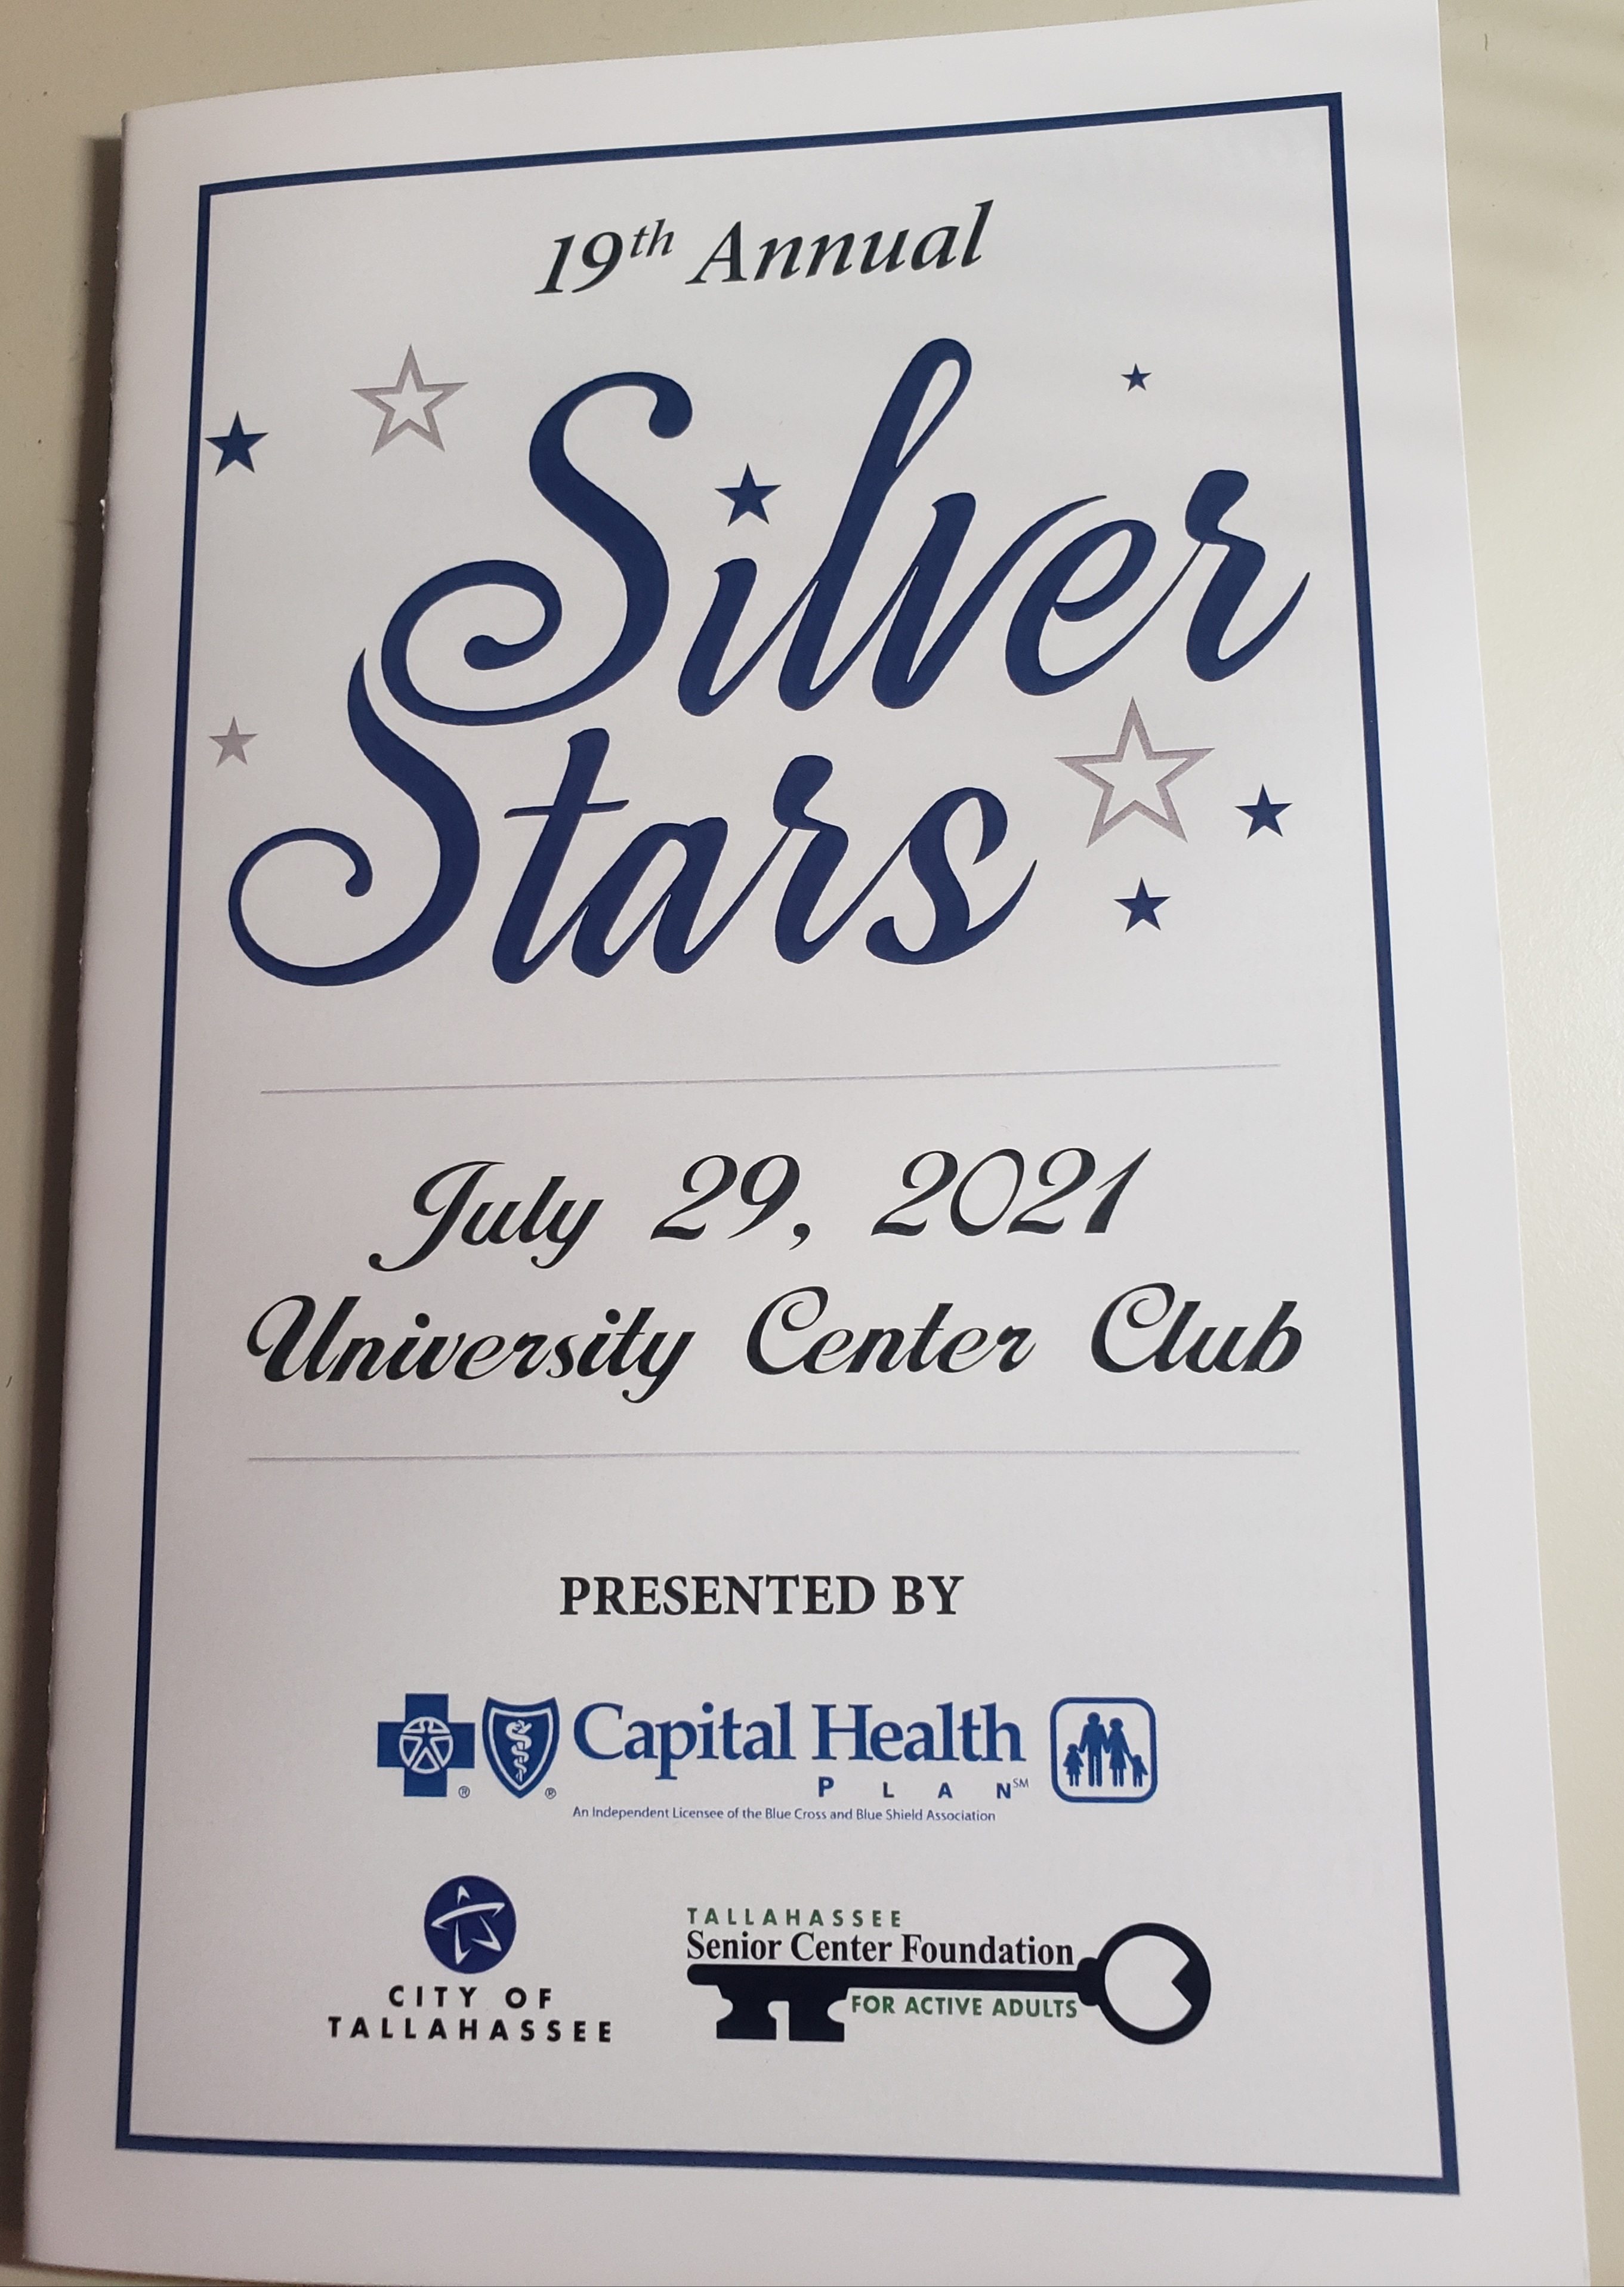 Silver Star Program